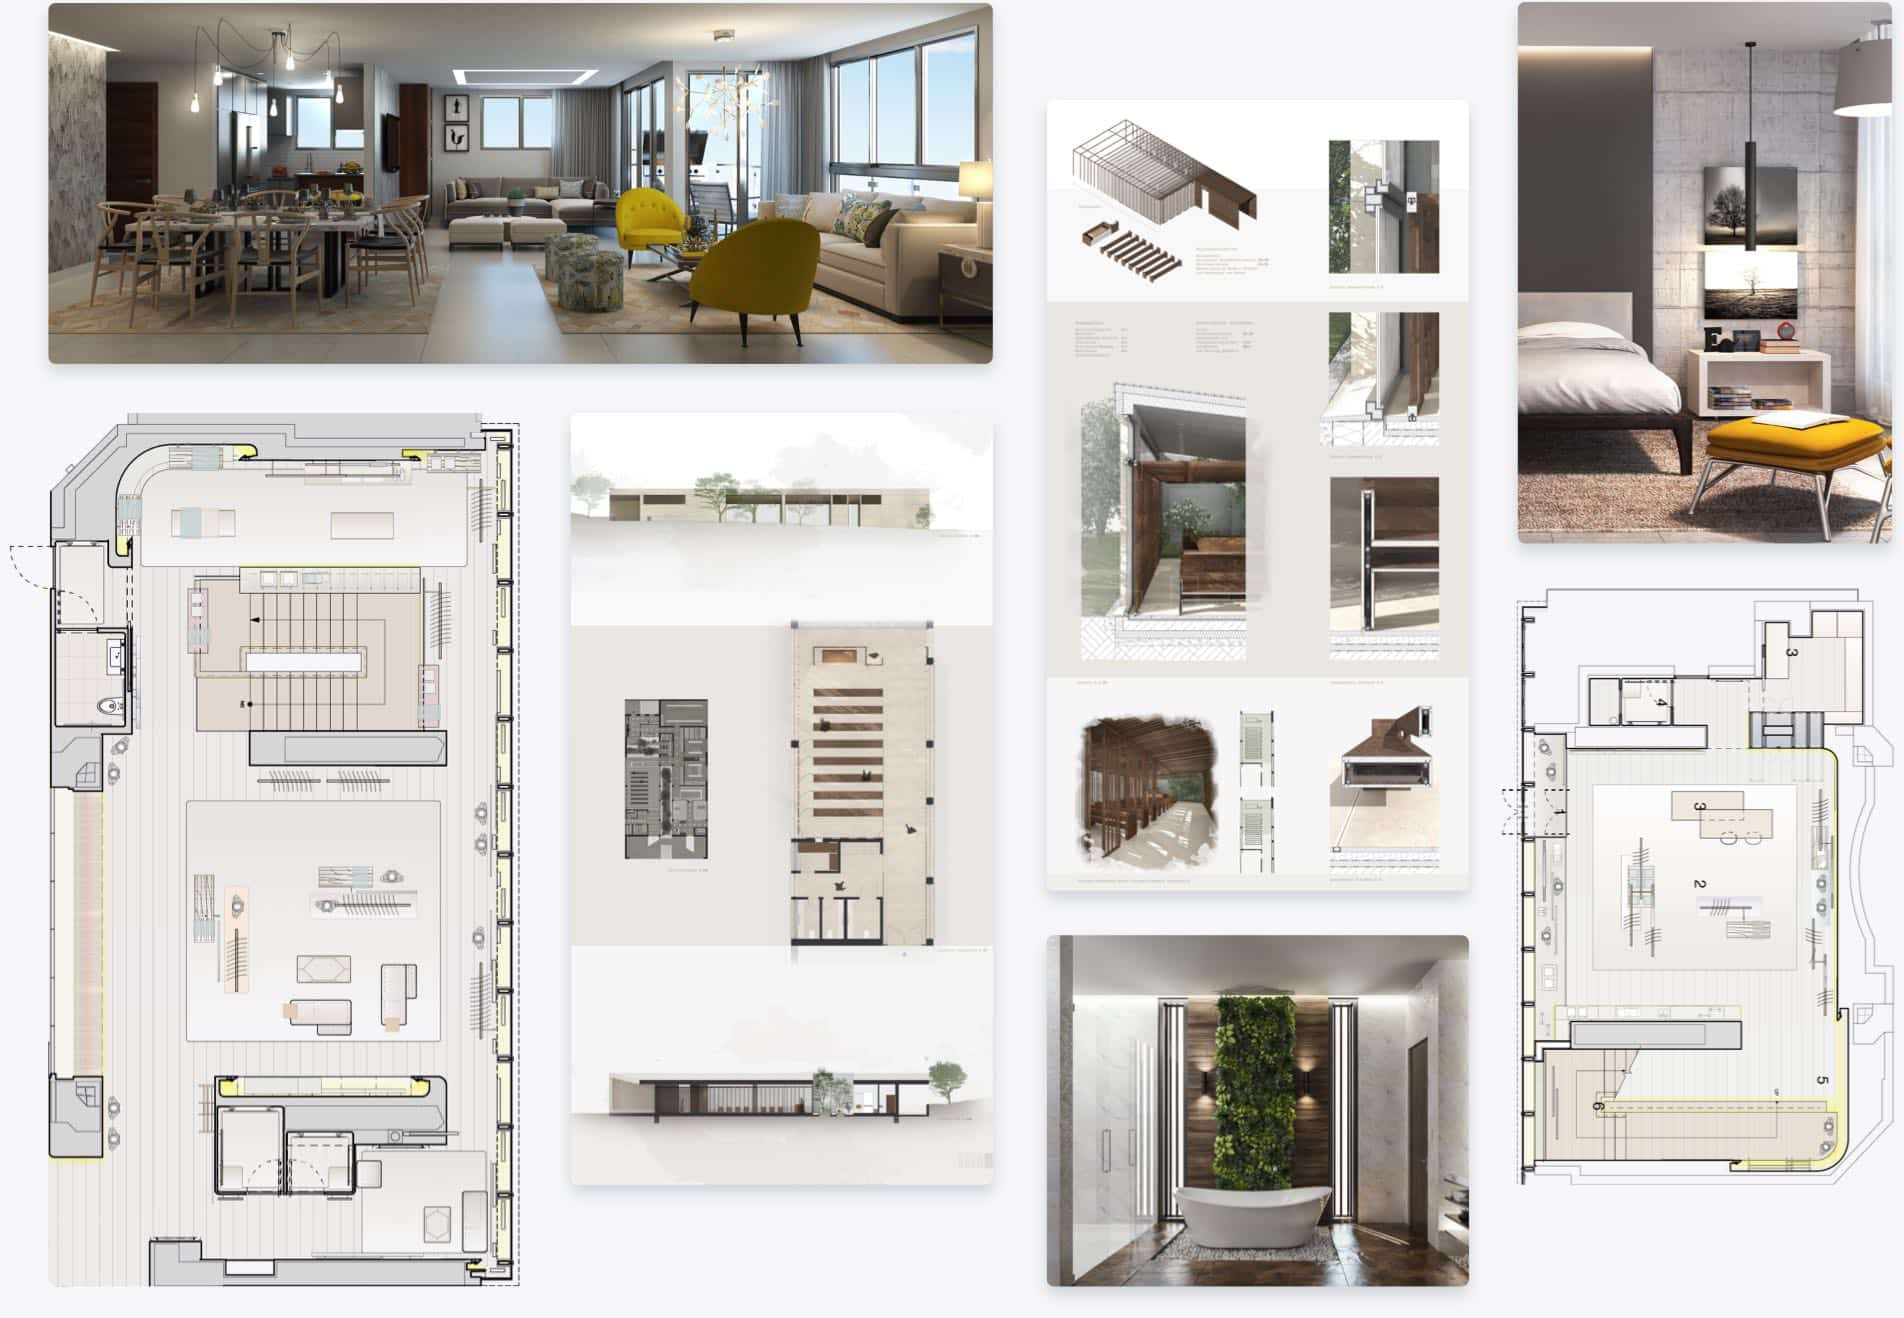  various renderings using design software for interiors